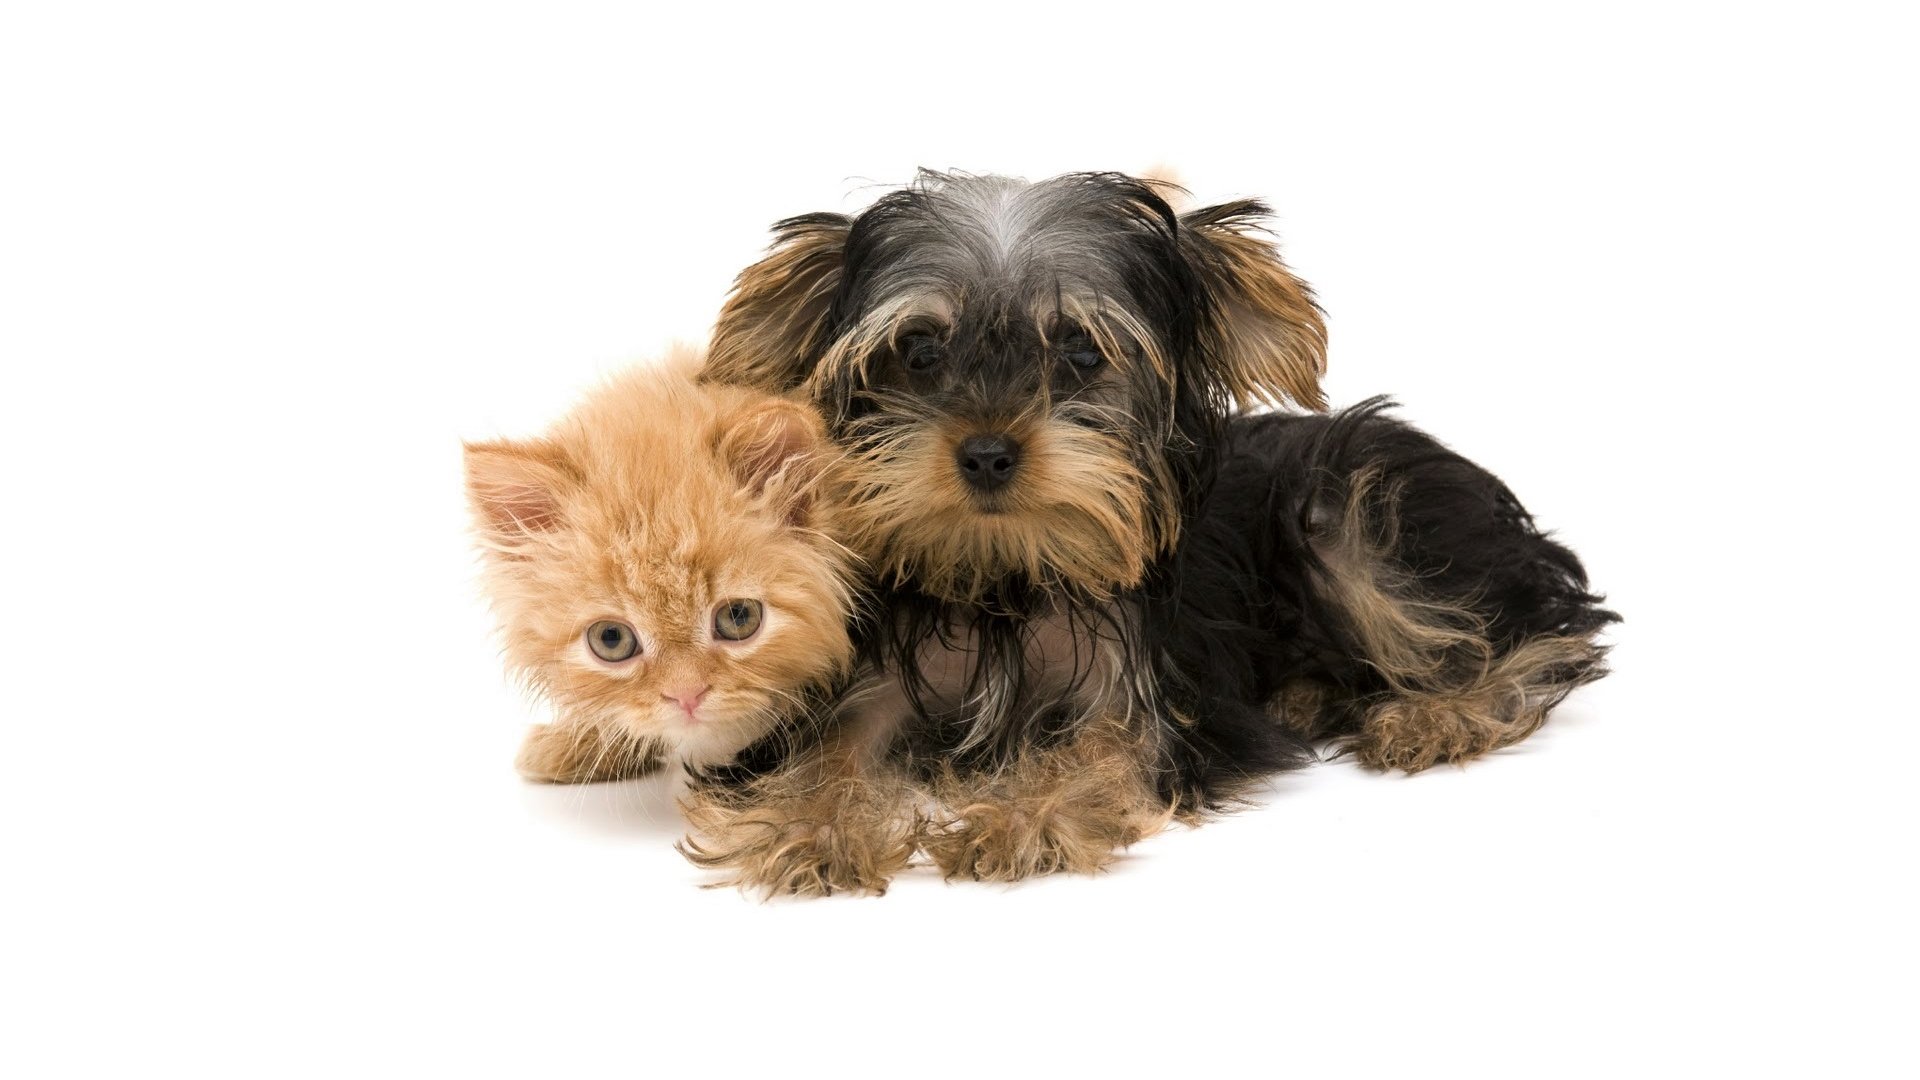 Kitten and Yorkshire Terrier